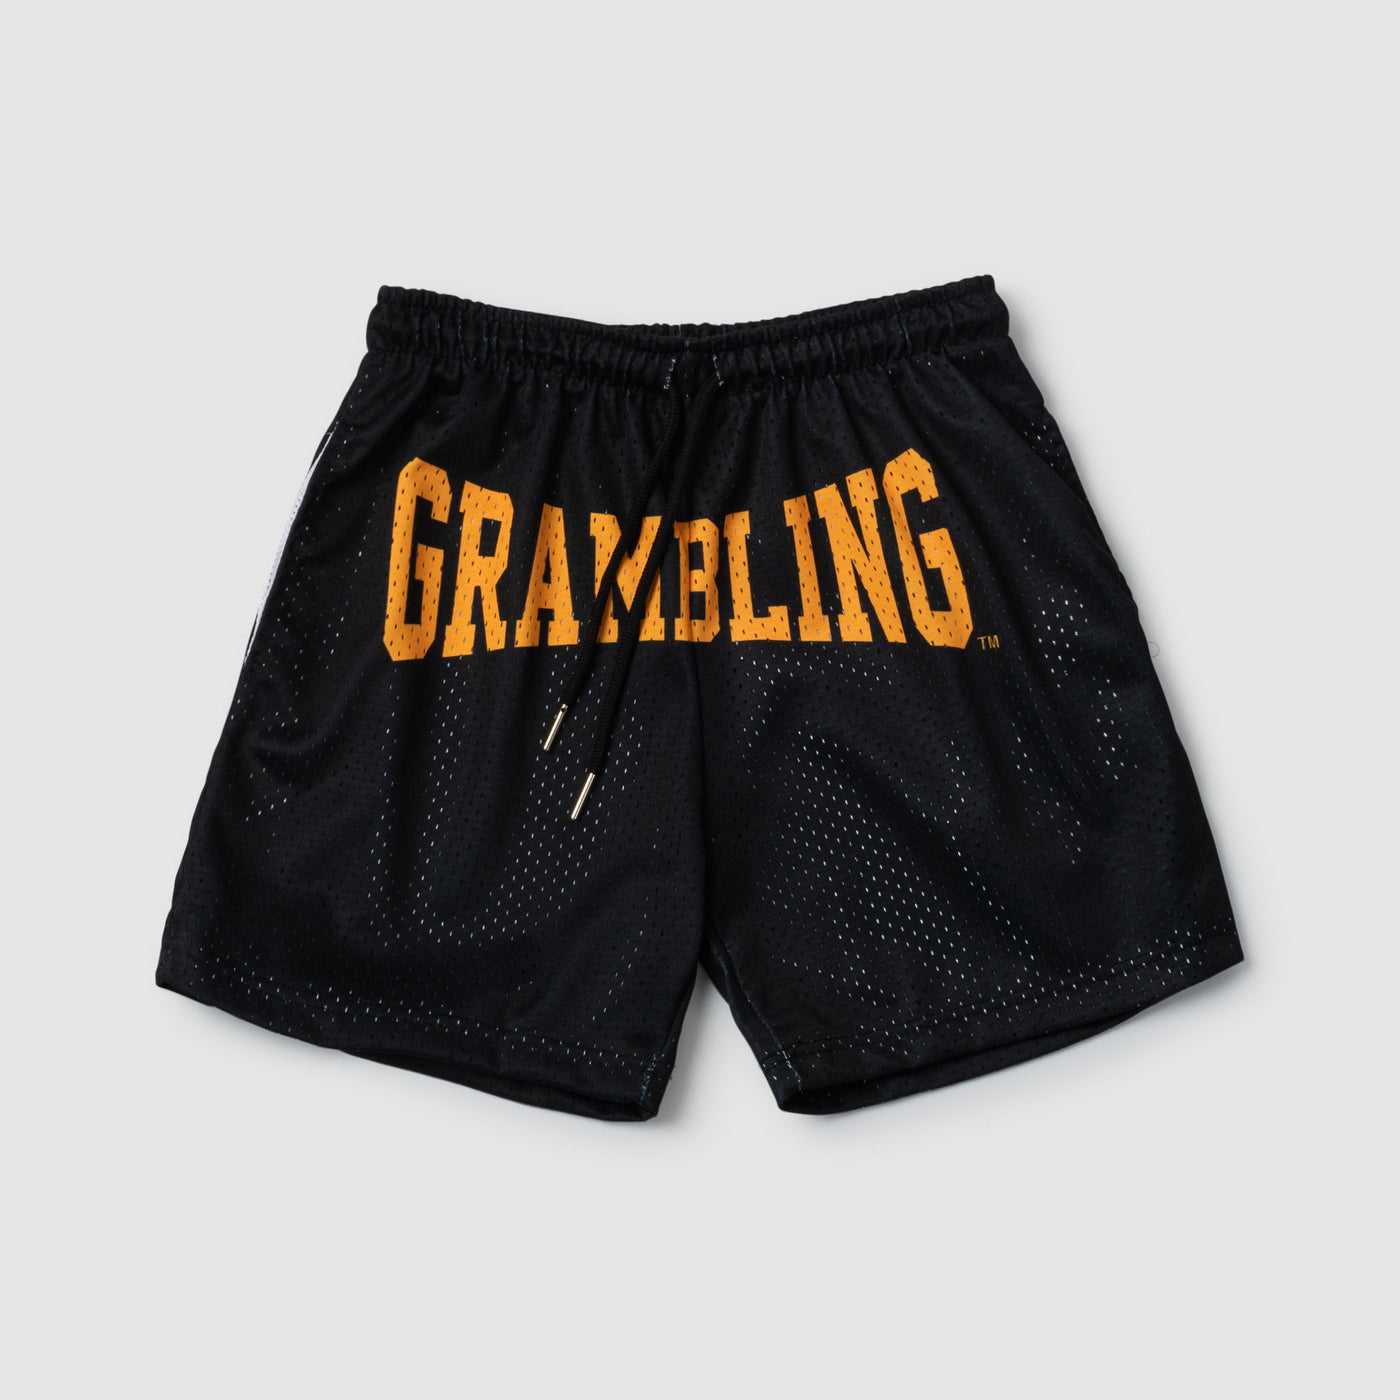 Grambling Vintage Mesh Shorts (Black)